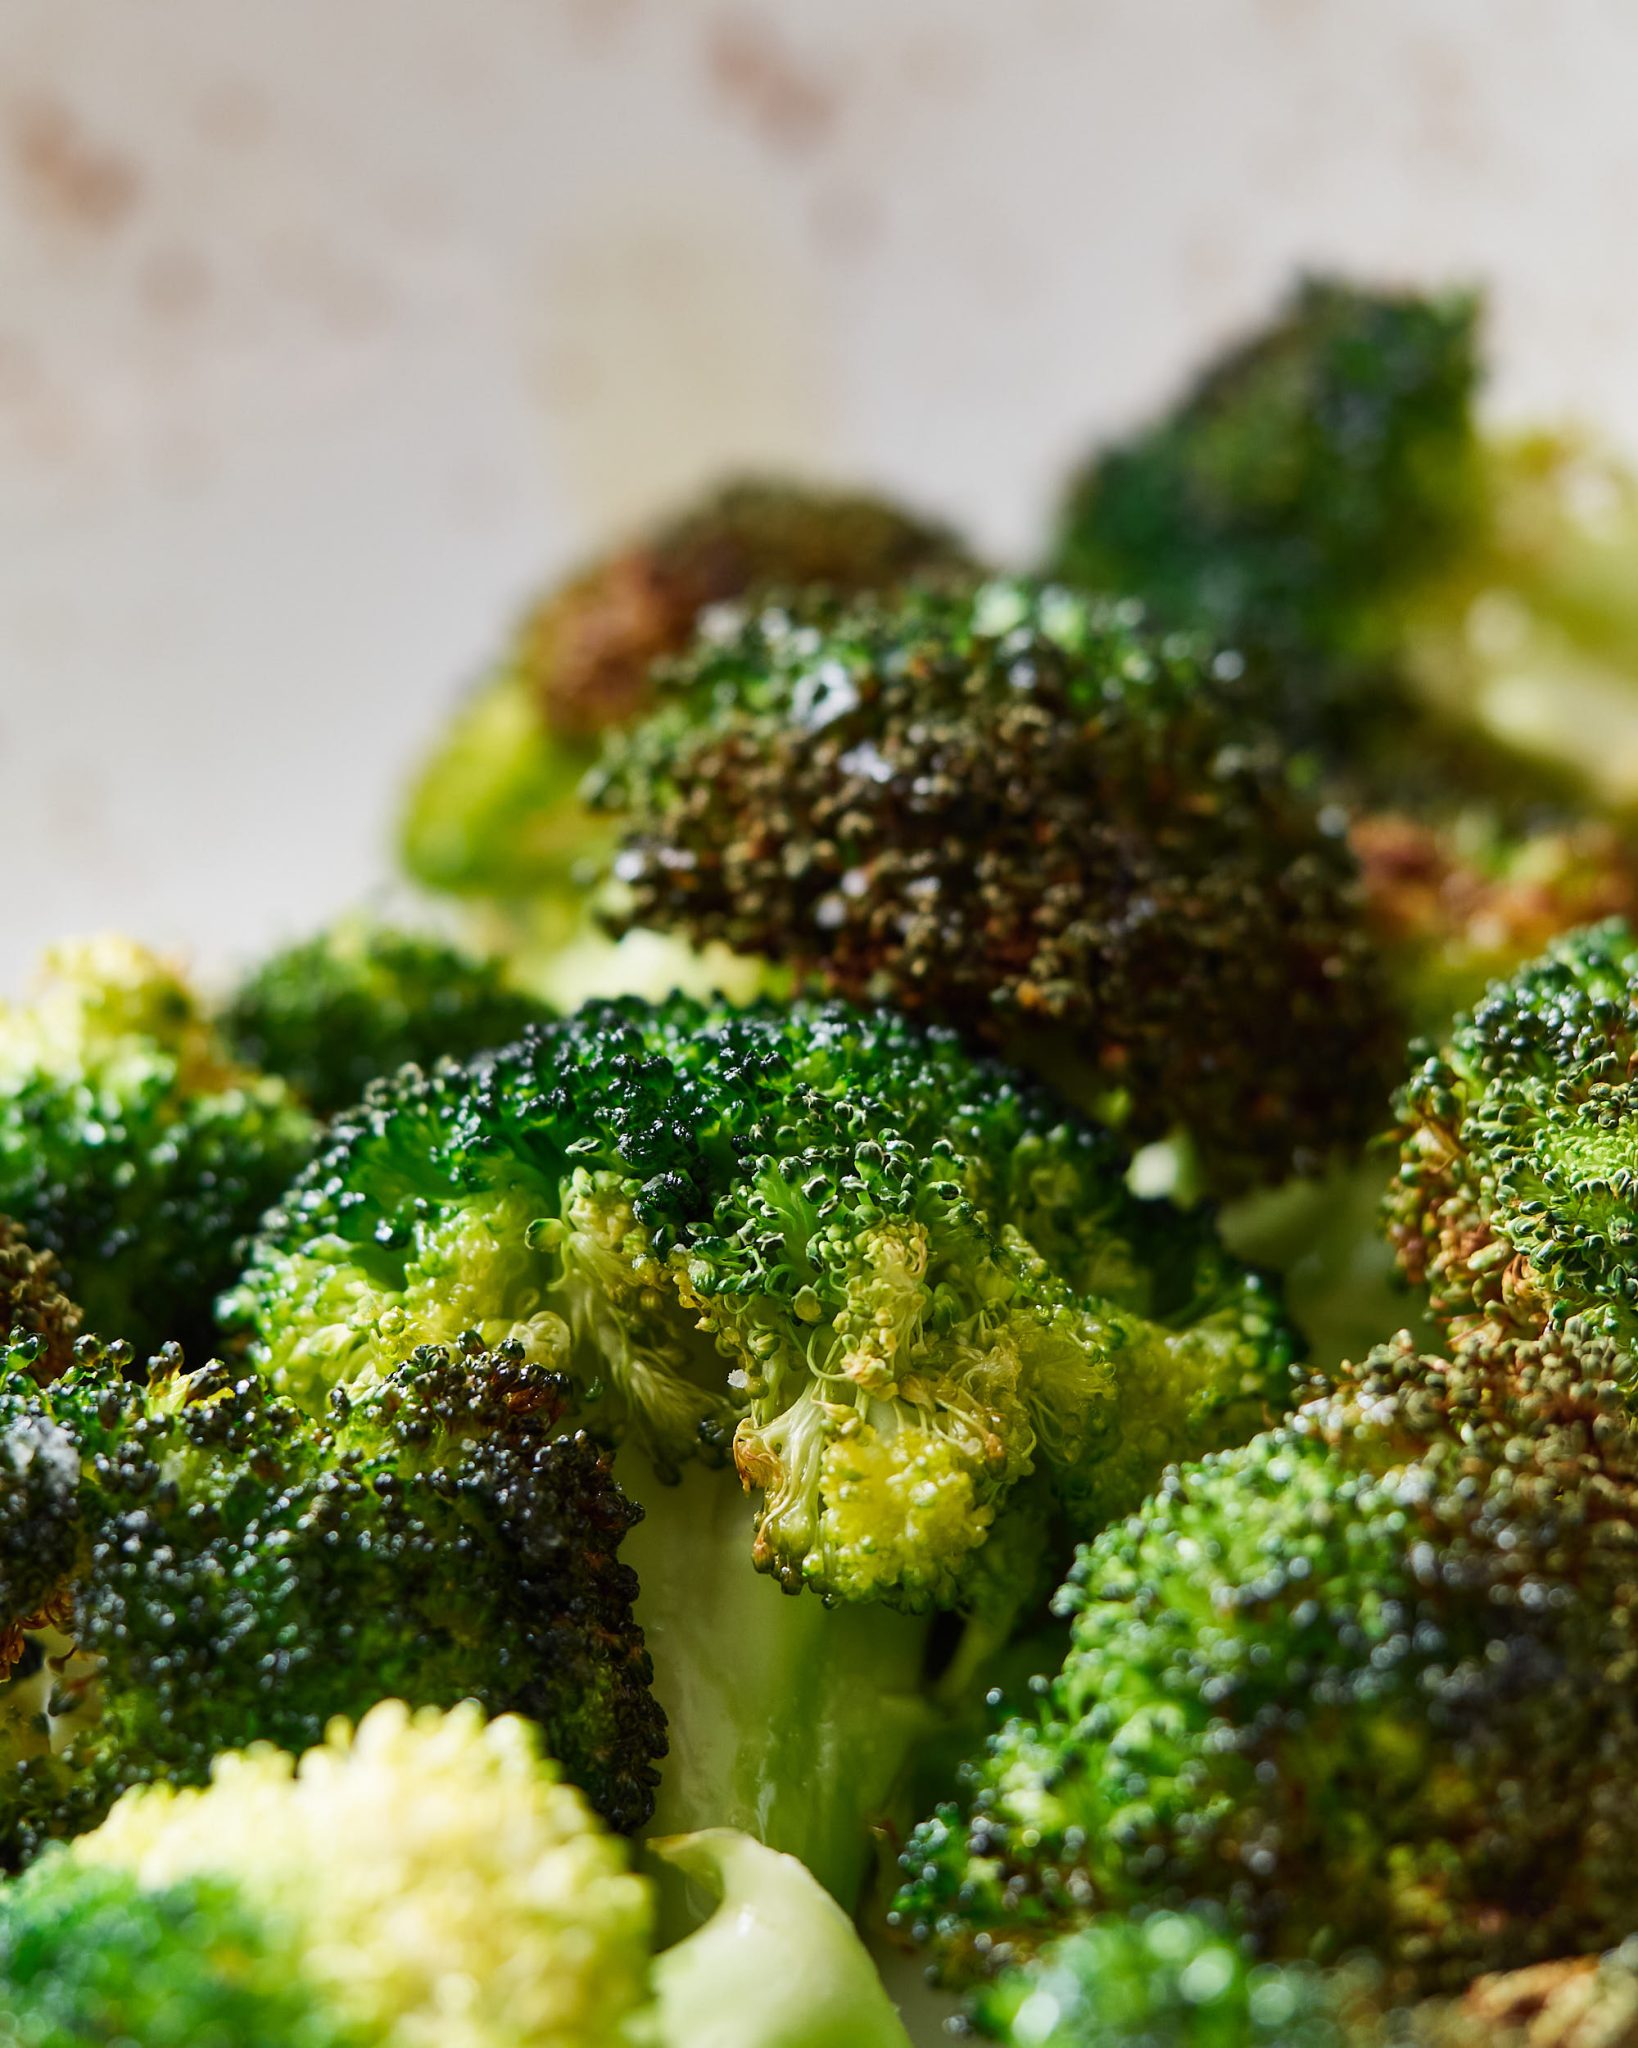 Air fryer broccoli recipe